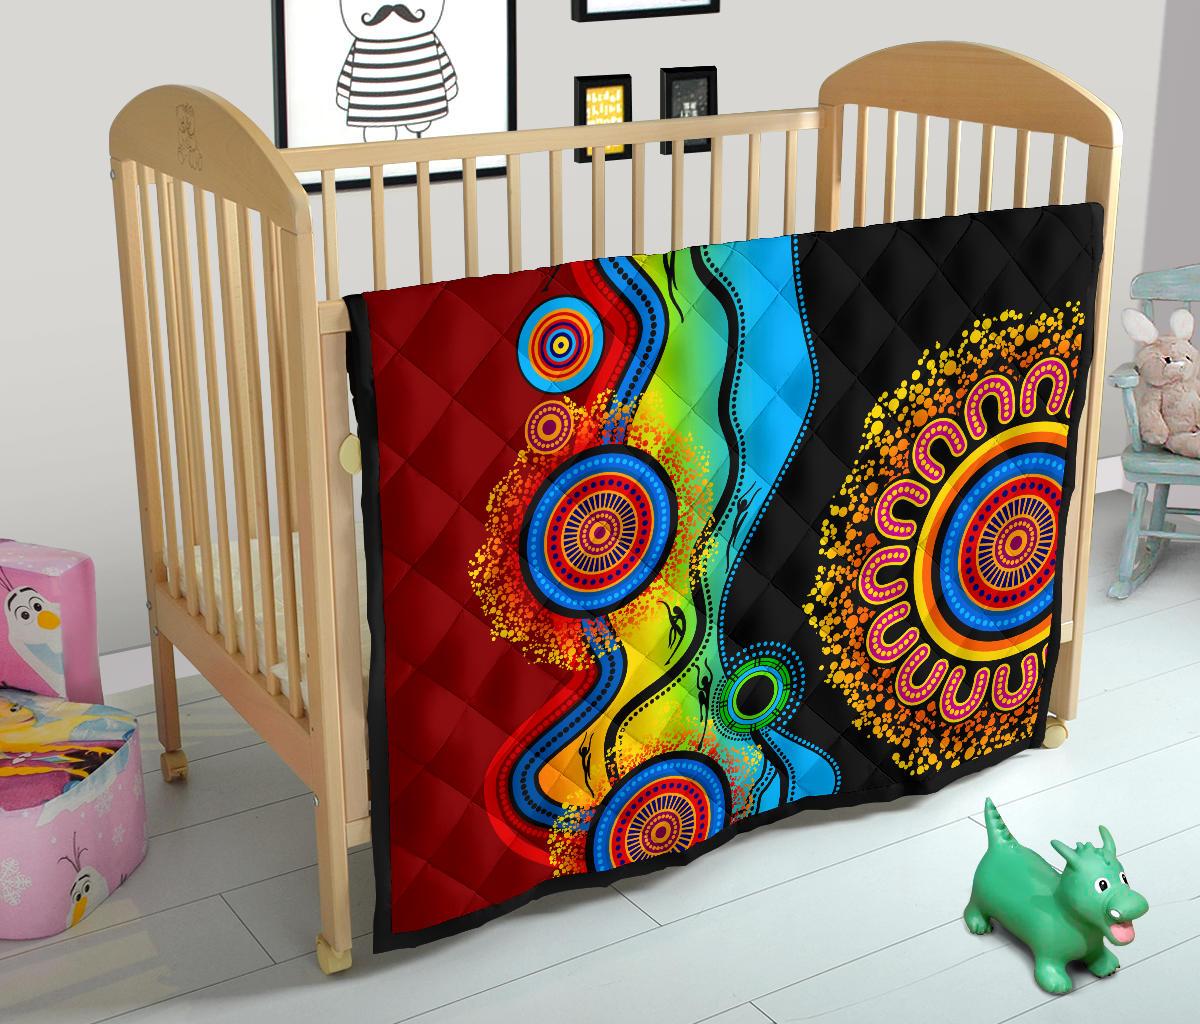 premium-quilts-aboriginal-patterns-coverlets